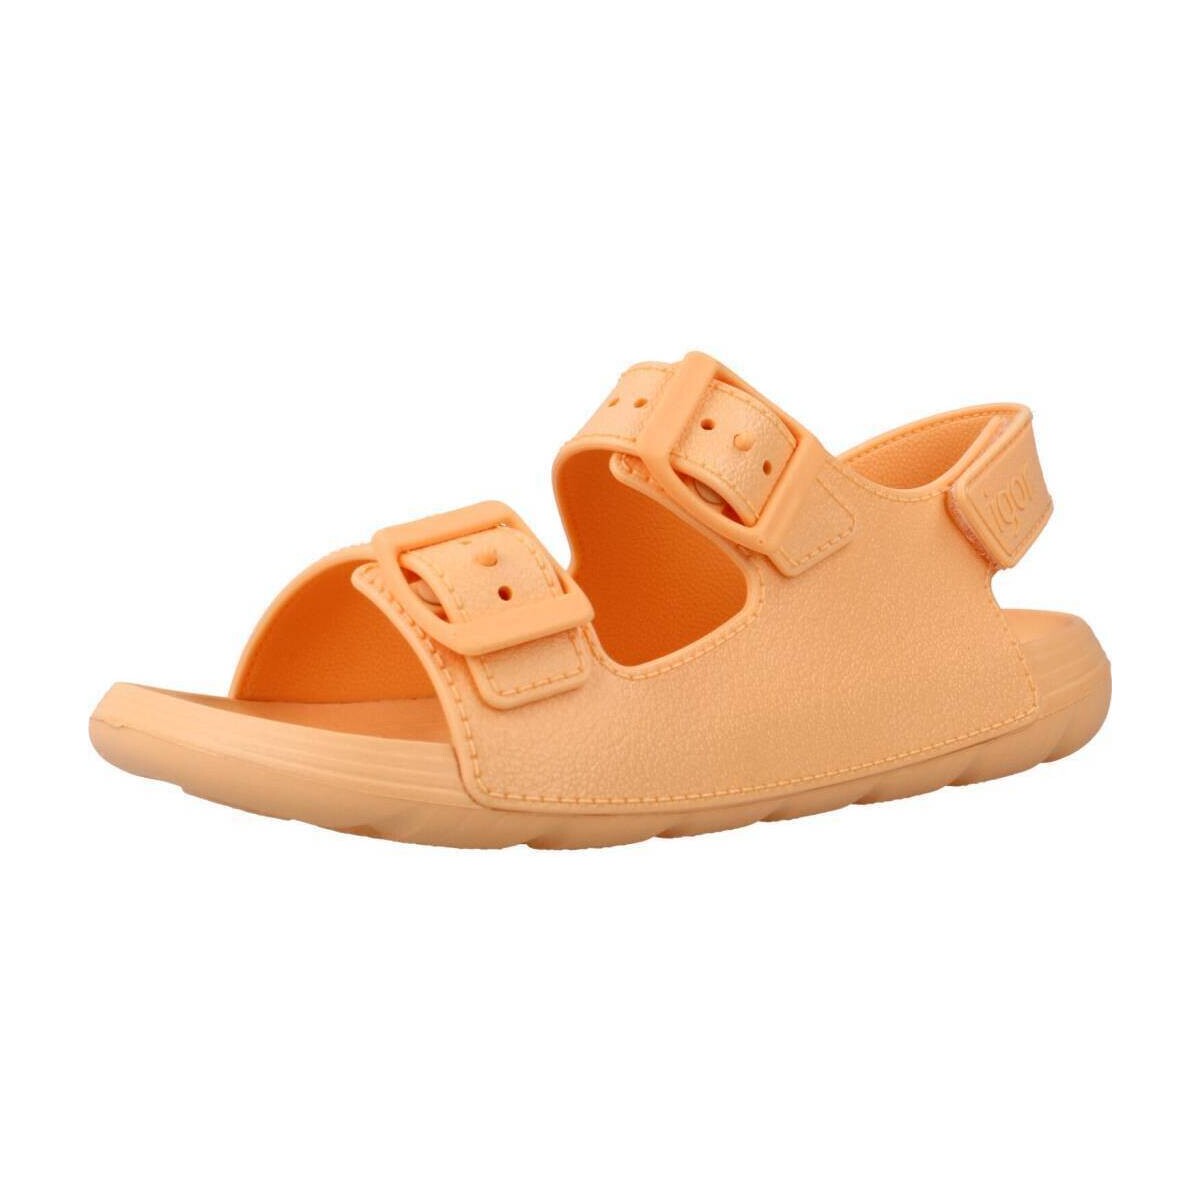 Chaussures Fille Tongs IGOR S10298 Orange